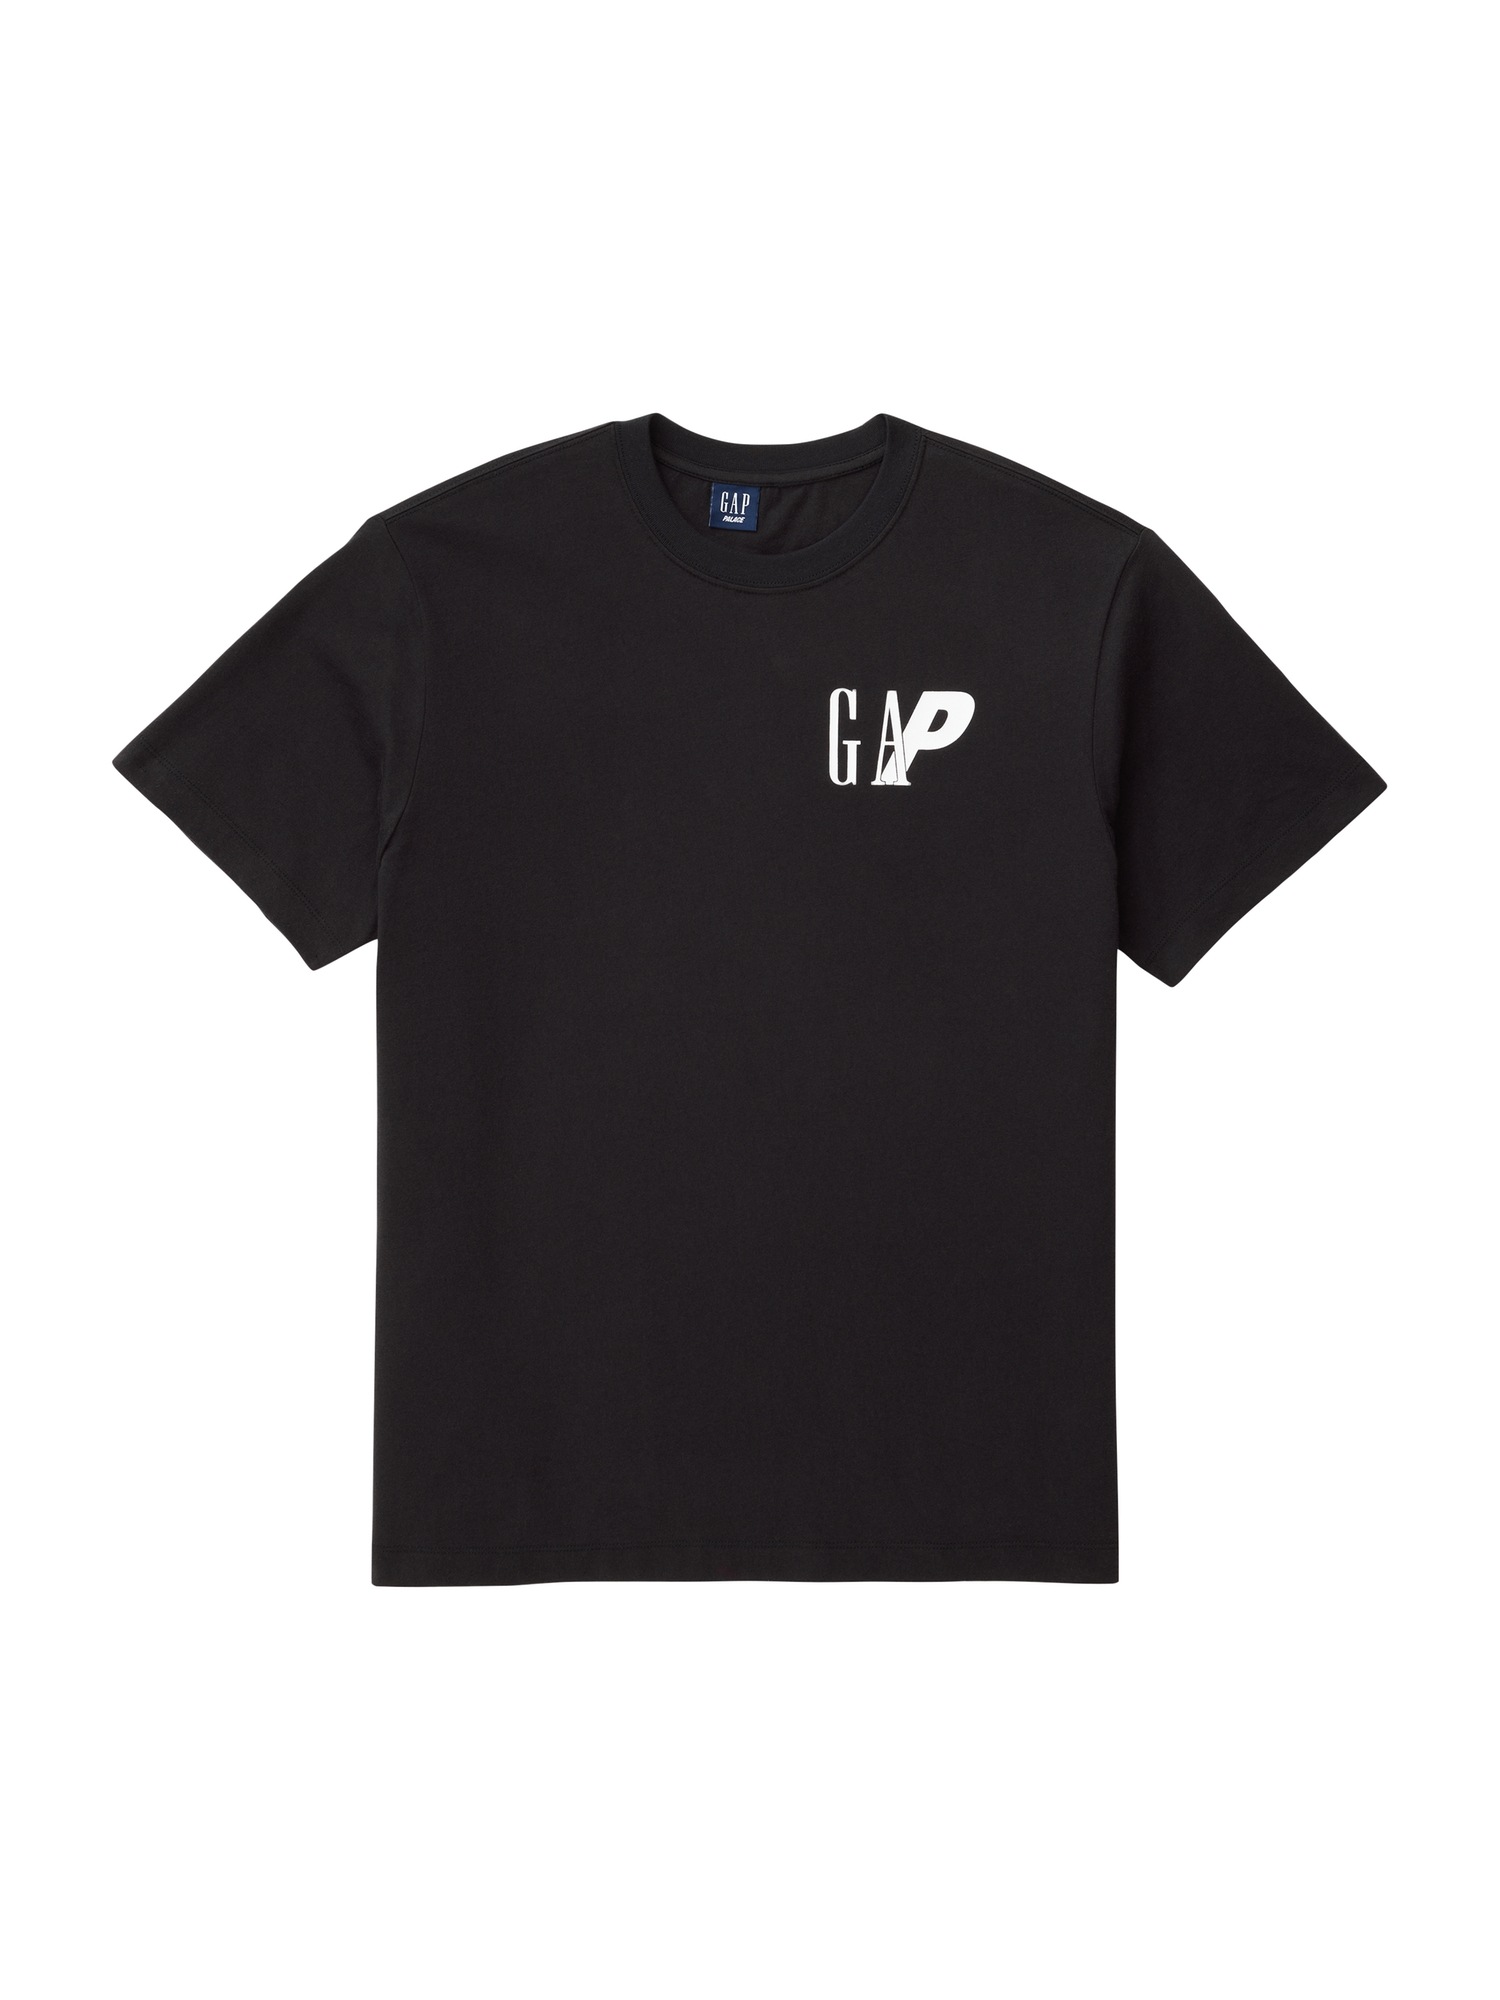 Palace Gap T-Shirt | Gap